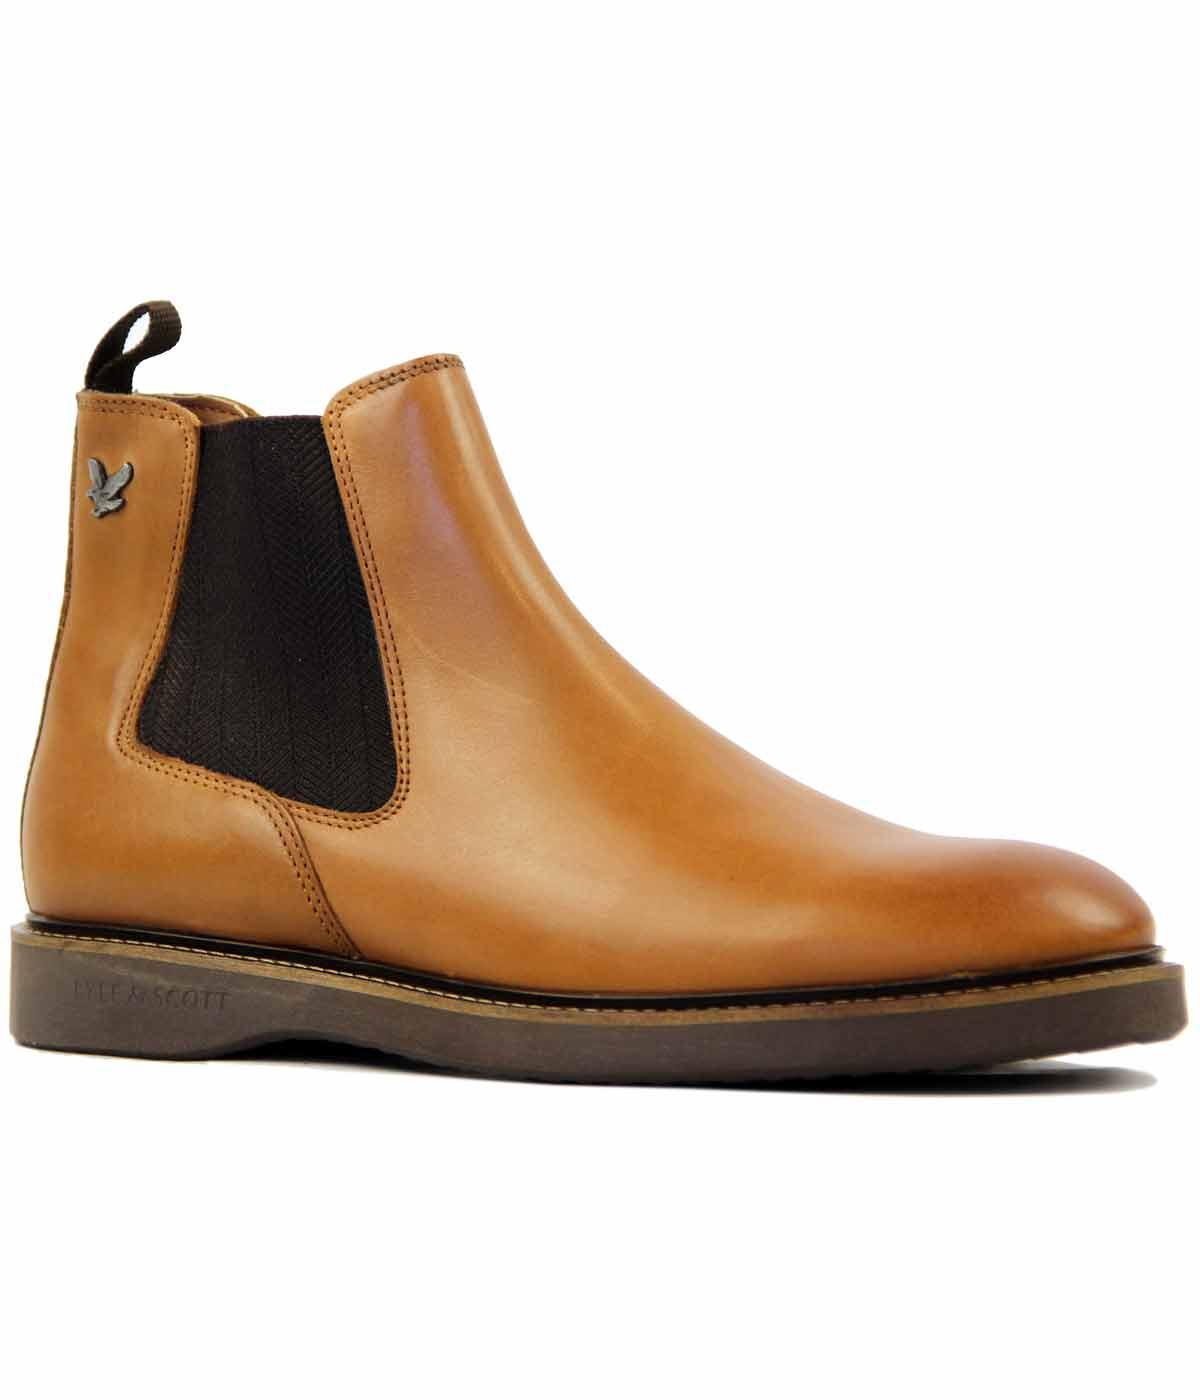 LYLE & SCOTT Prosen Leather Retro Chelsea Boots